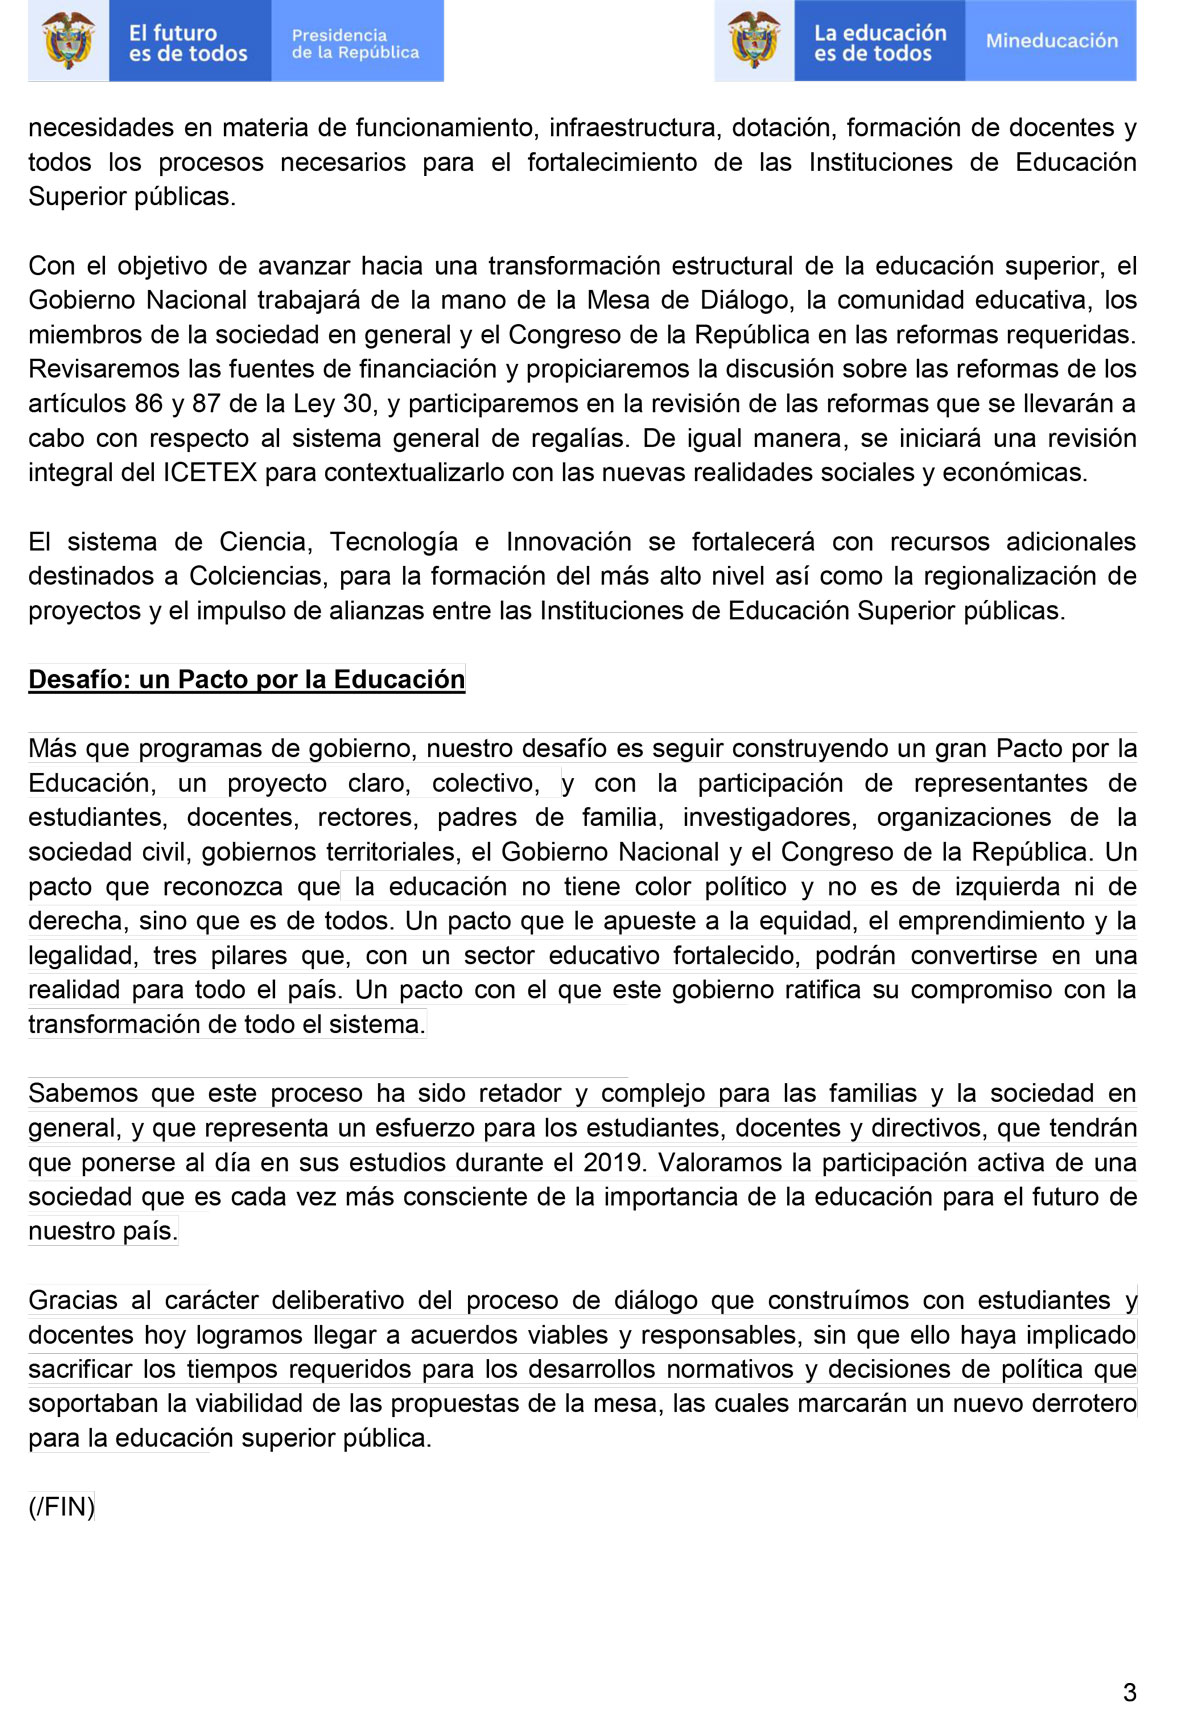 https://periodico.udenar.edu.co/wp-content/uploads/2018/12/acuerdo-estudiantes-gobierno-nacional-3.jpg